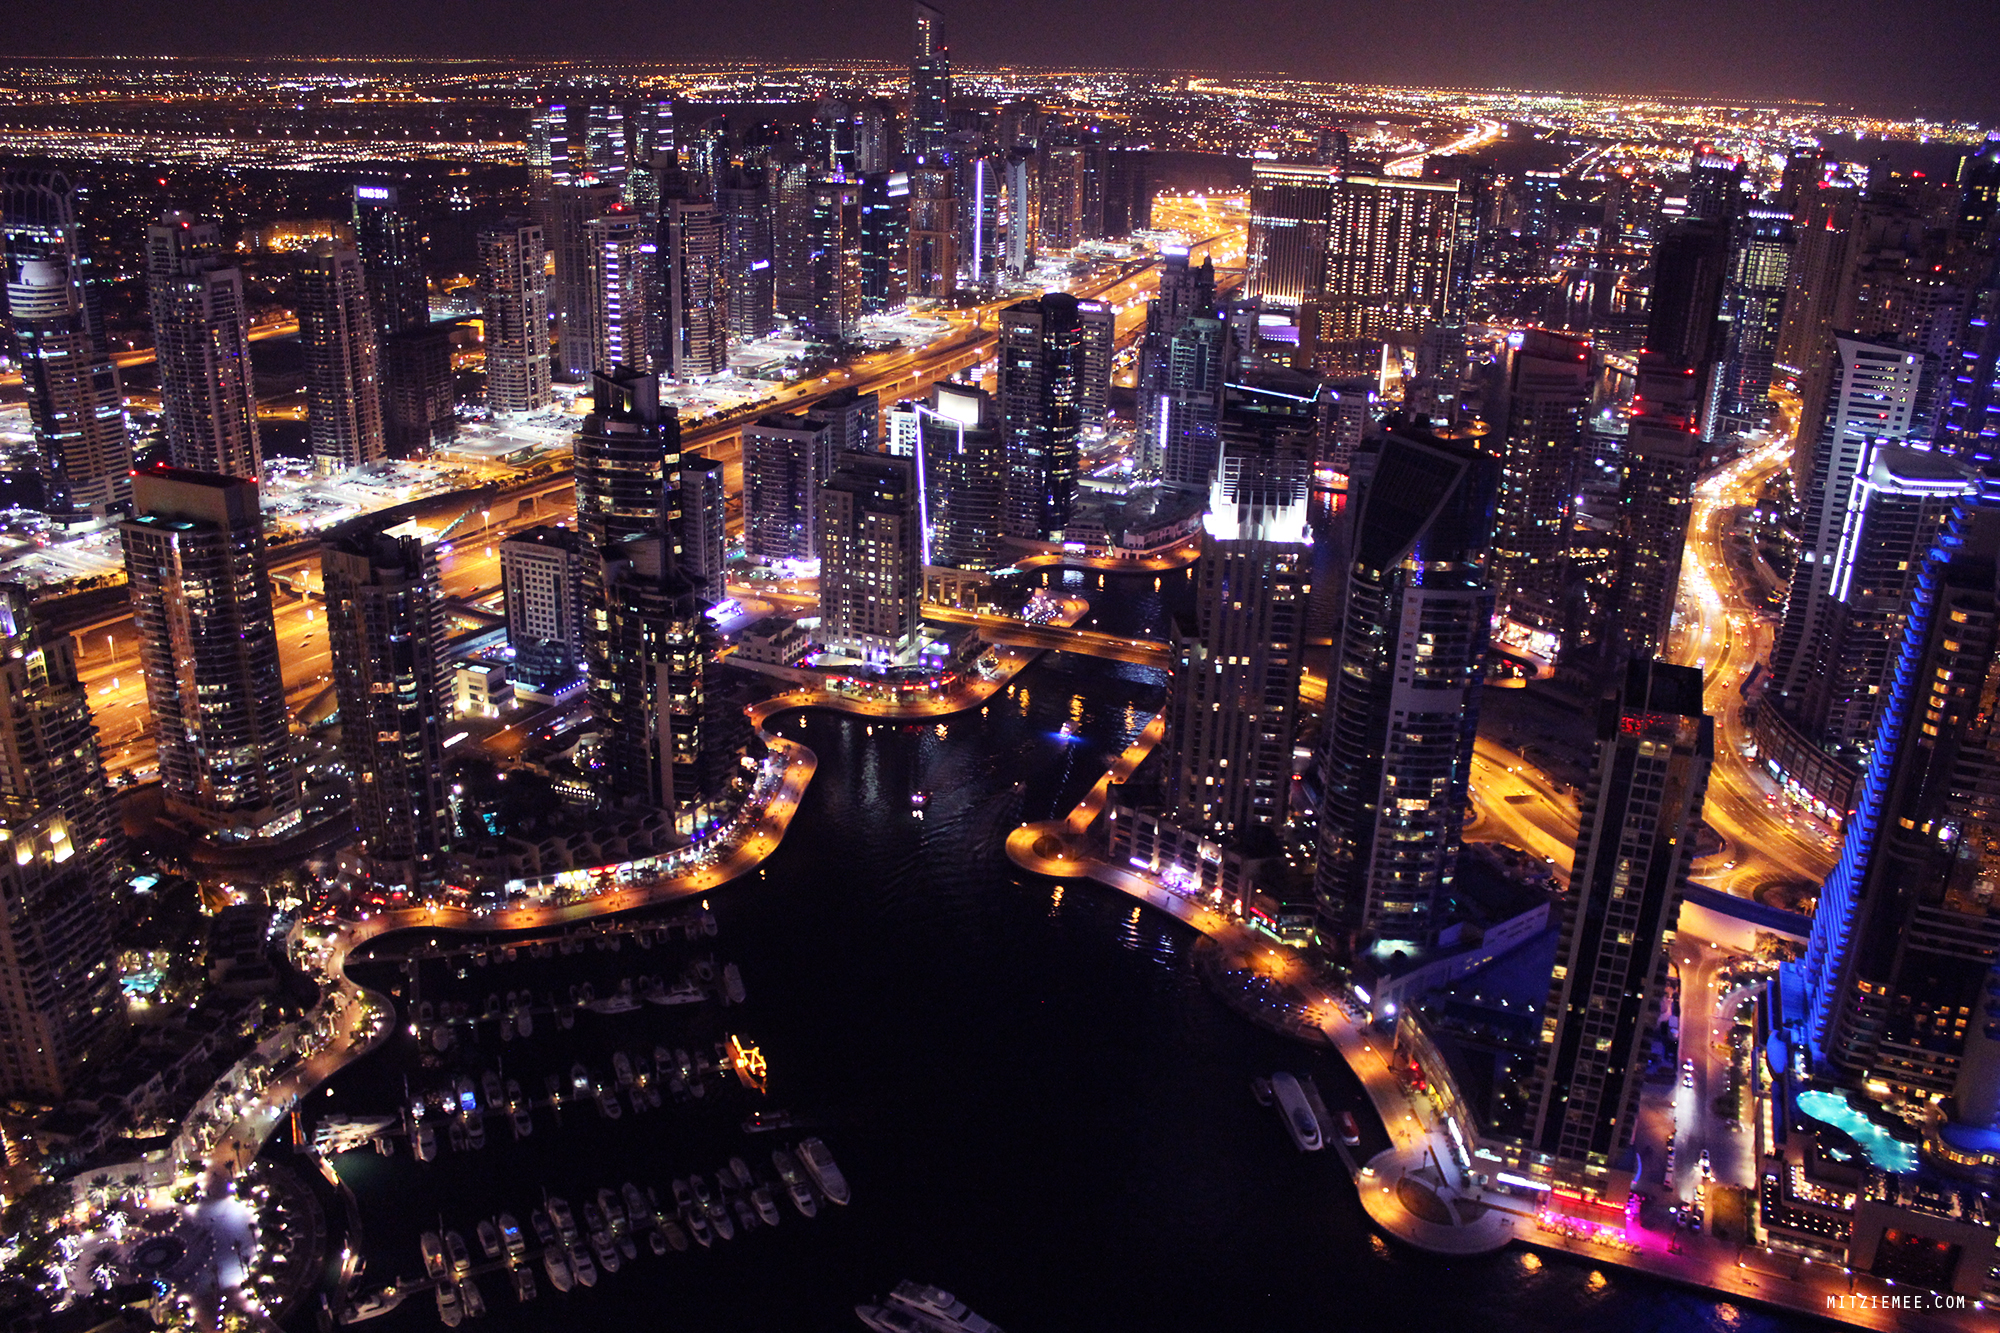 Dubai Marina night view from The Torch